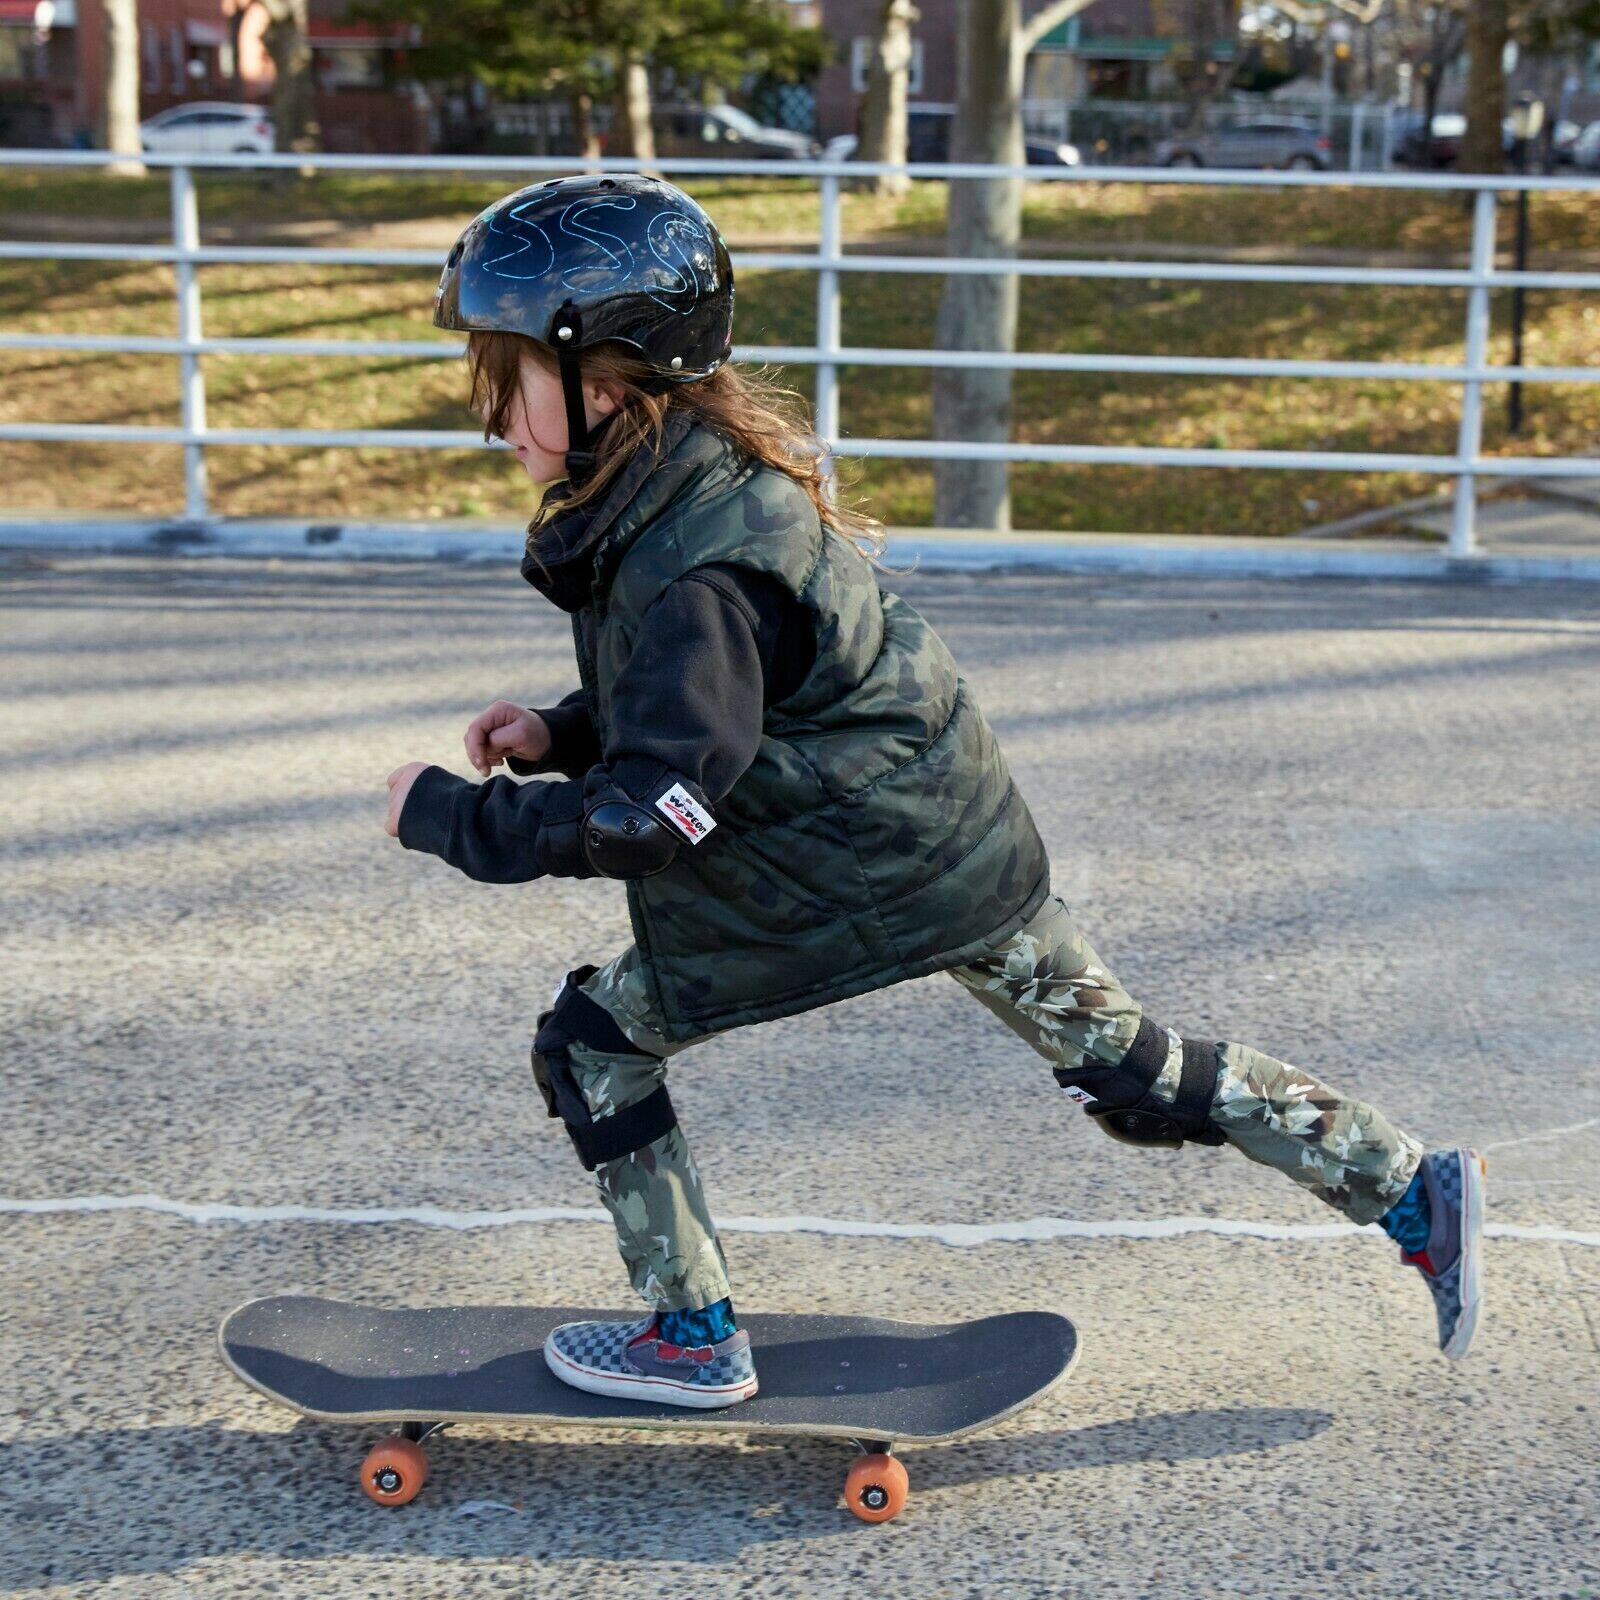 Wipeout Kids Bike Scooter Skate Helmet - Create own designs - Black 5+ 4/5